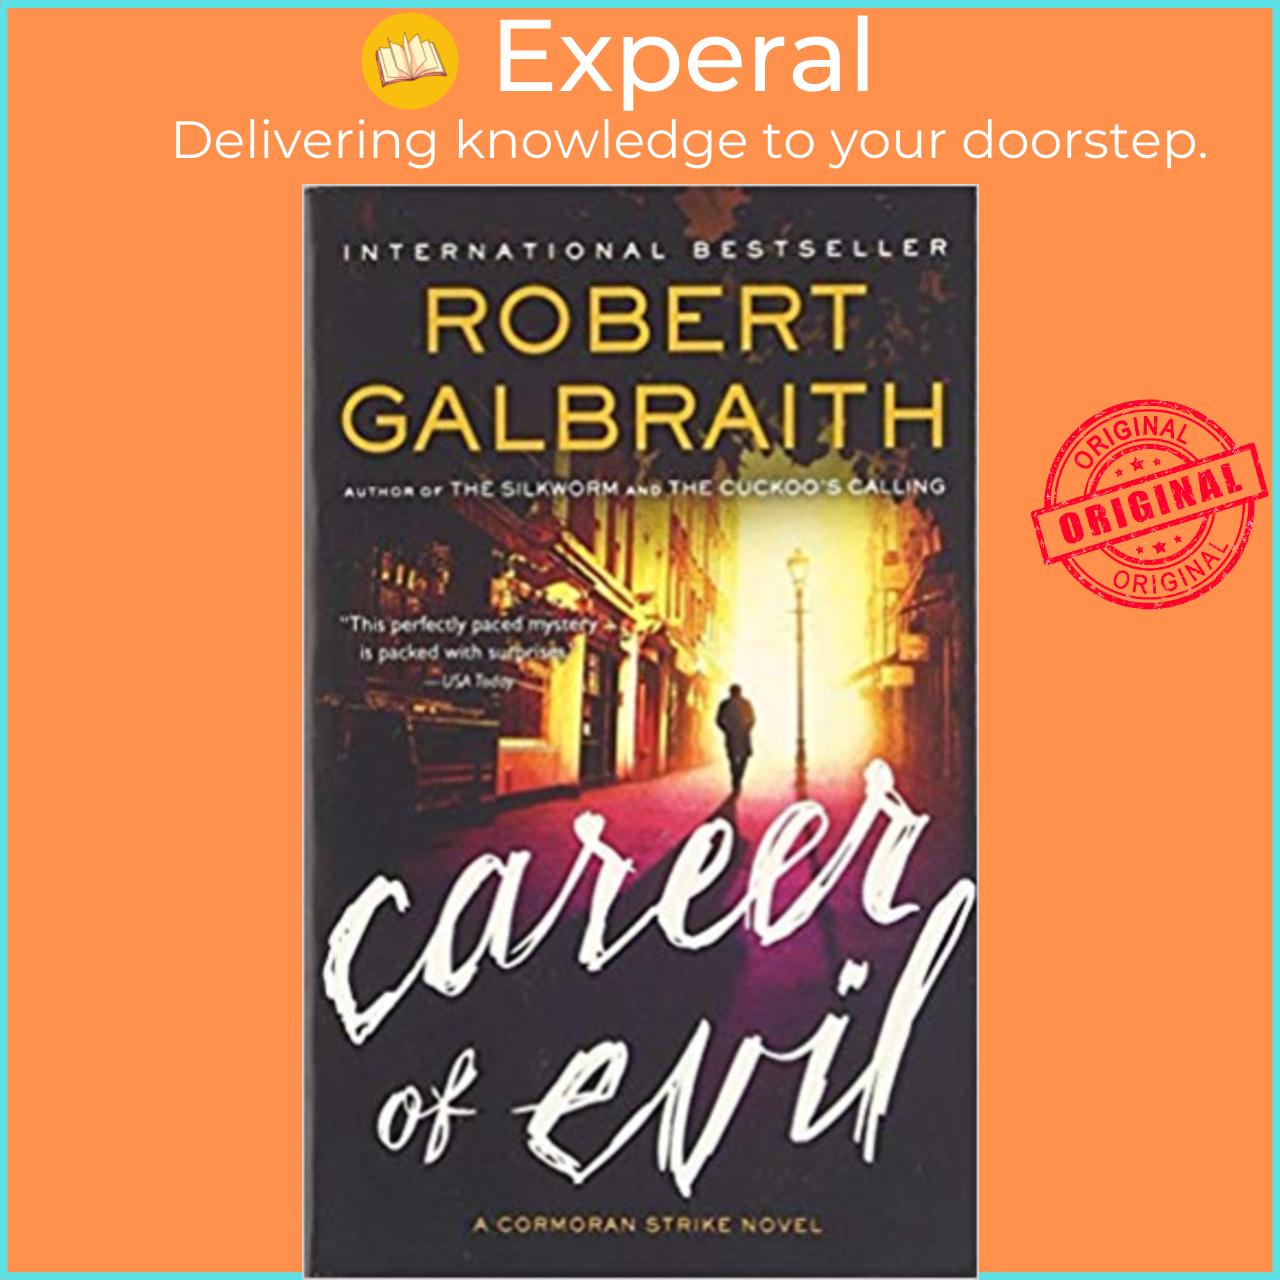 Sách - Career of Evil by Robert Galbraith (US edition, paperback)